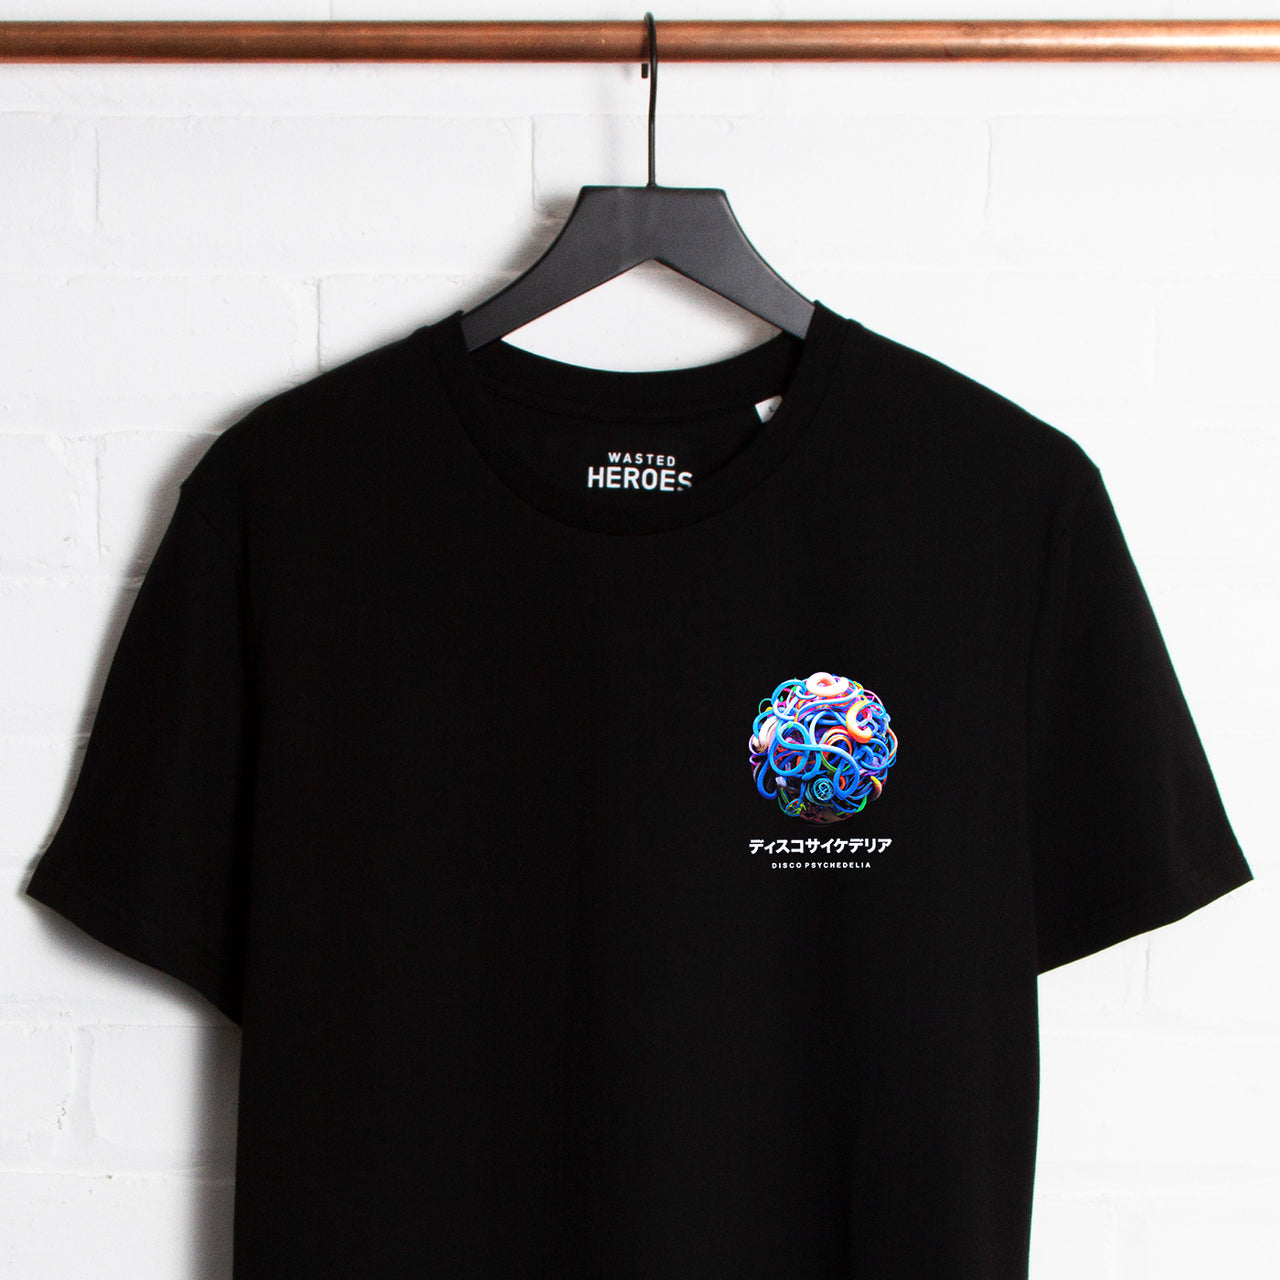 Crest Orb 014 - Tshirt - Black